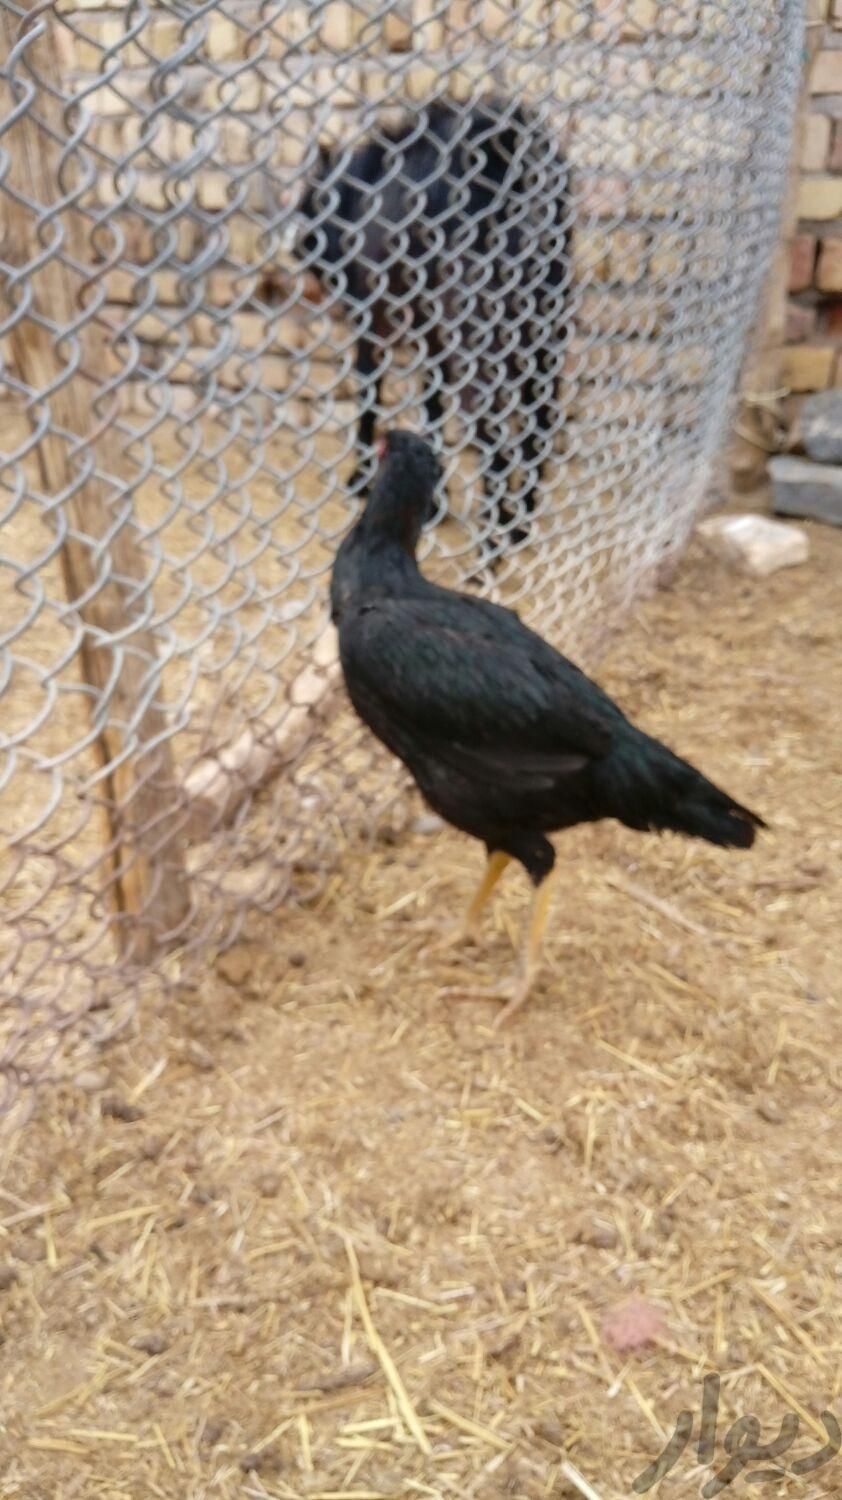 مرغ لاری سیاه جوان|حیوانات مزرعه|قم, دورشهر|دیوار